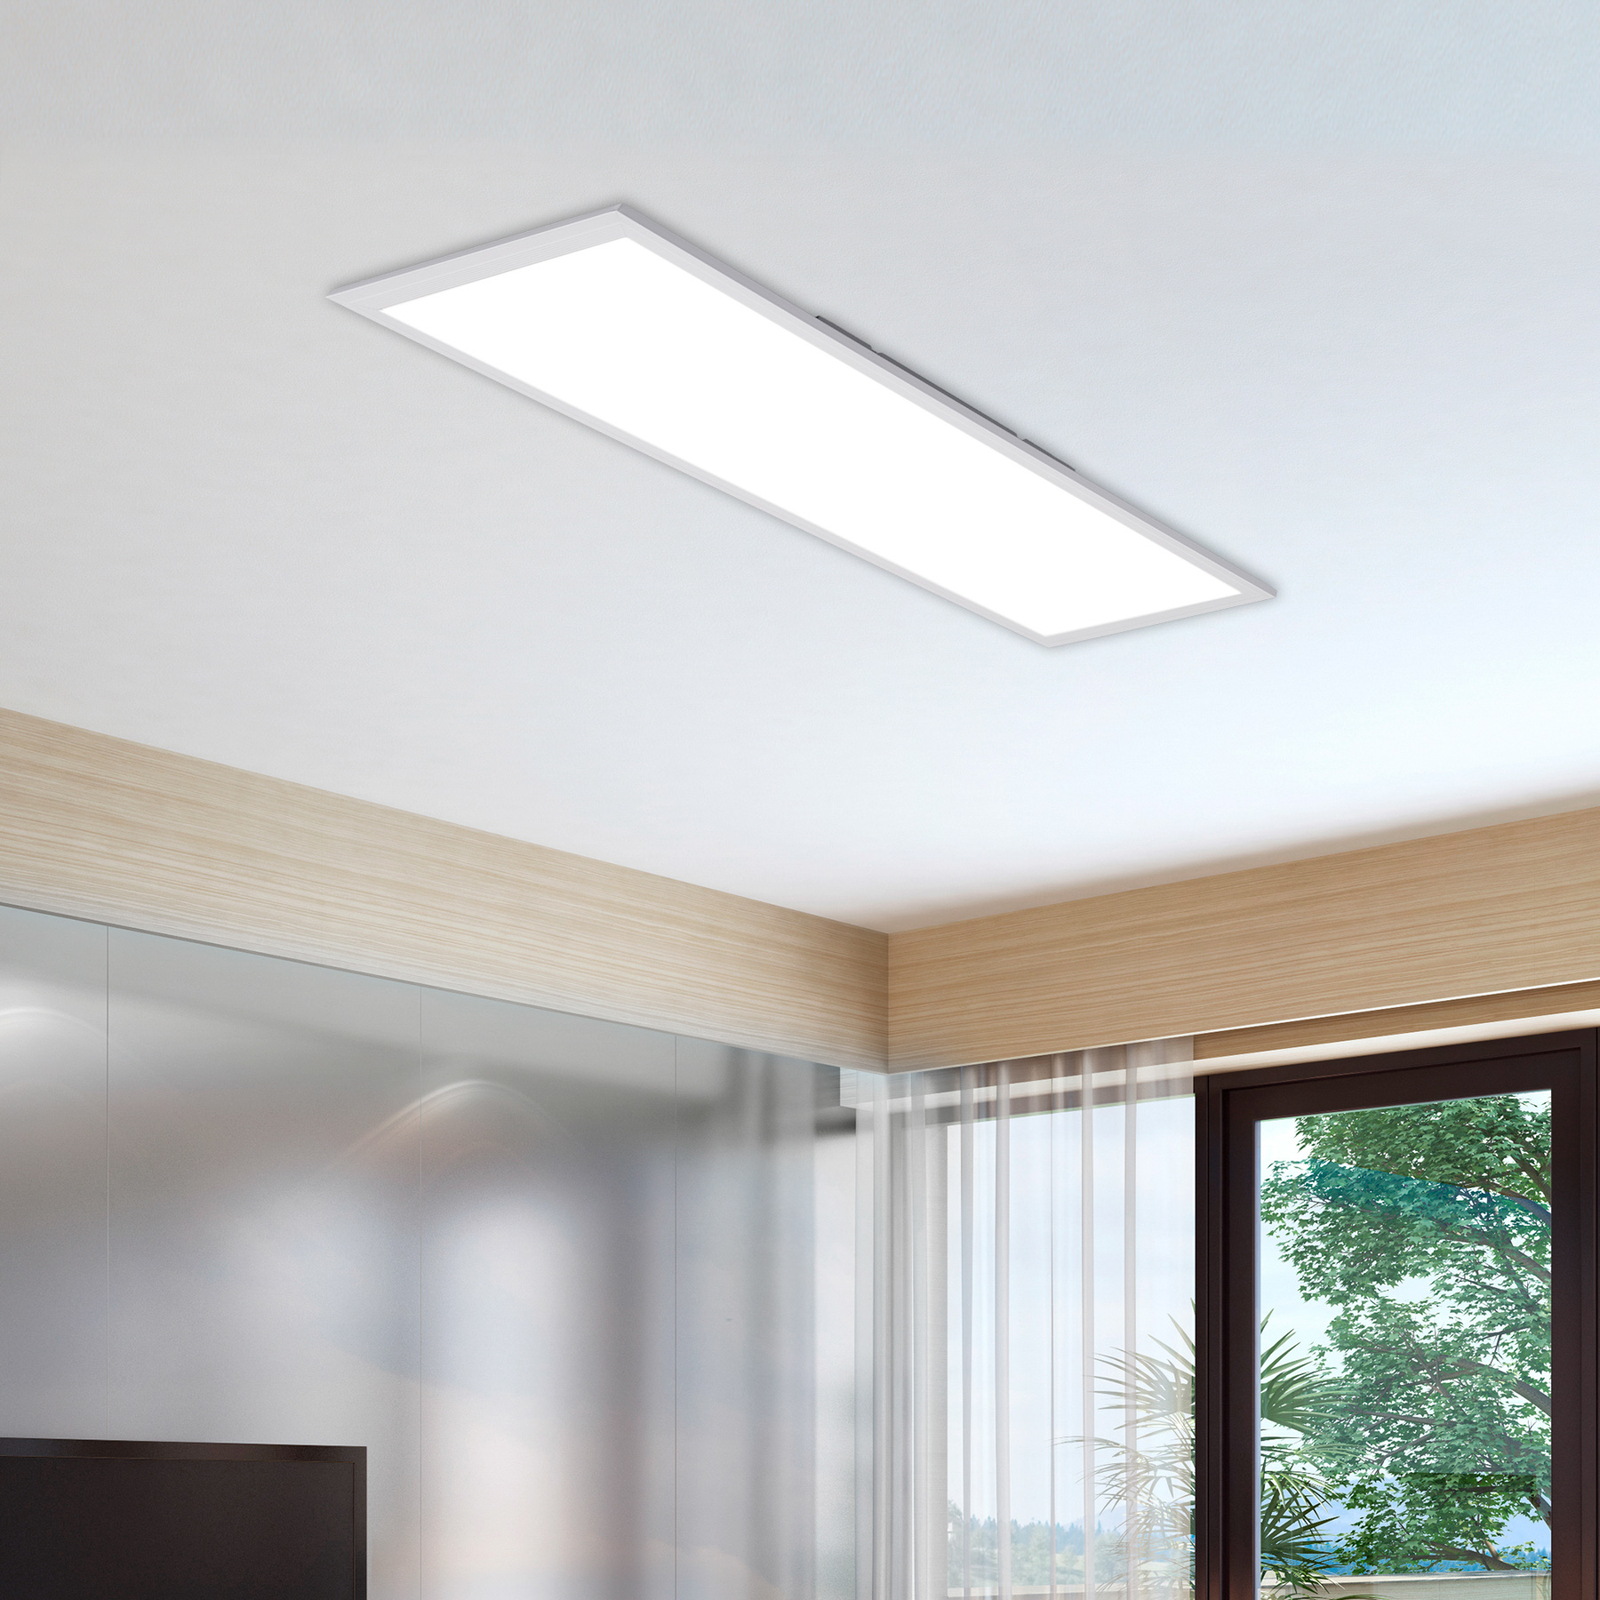 Simple LED panel, biela, ultra tenký, 119,5x29,5cm